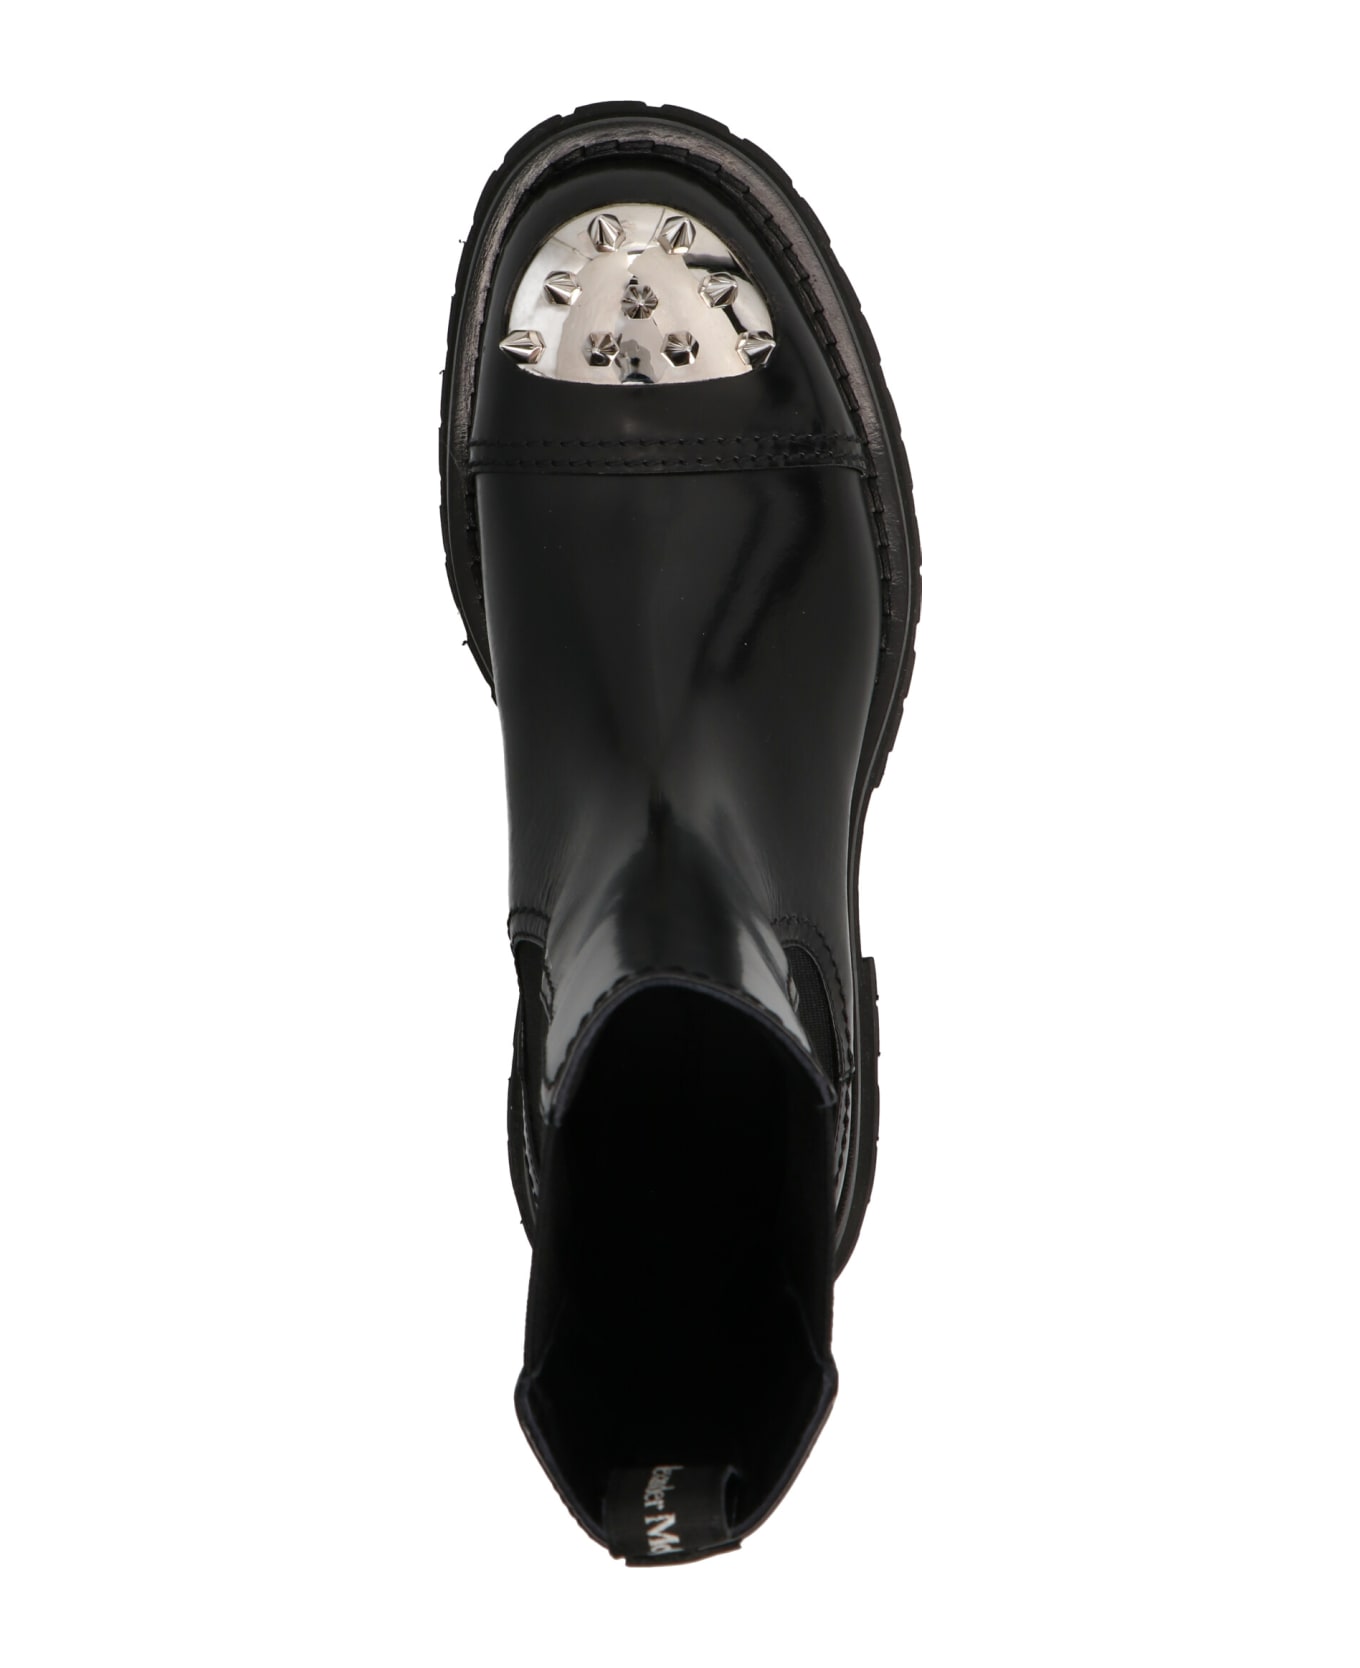 Alexander McQueen Studded Chelsea Boots - Black  